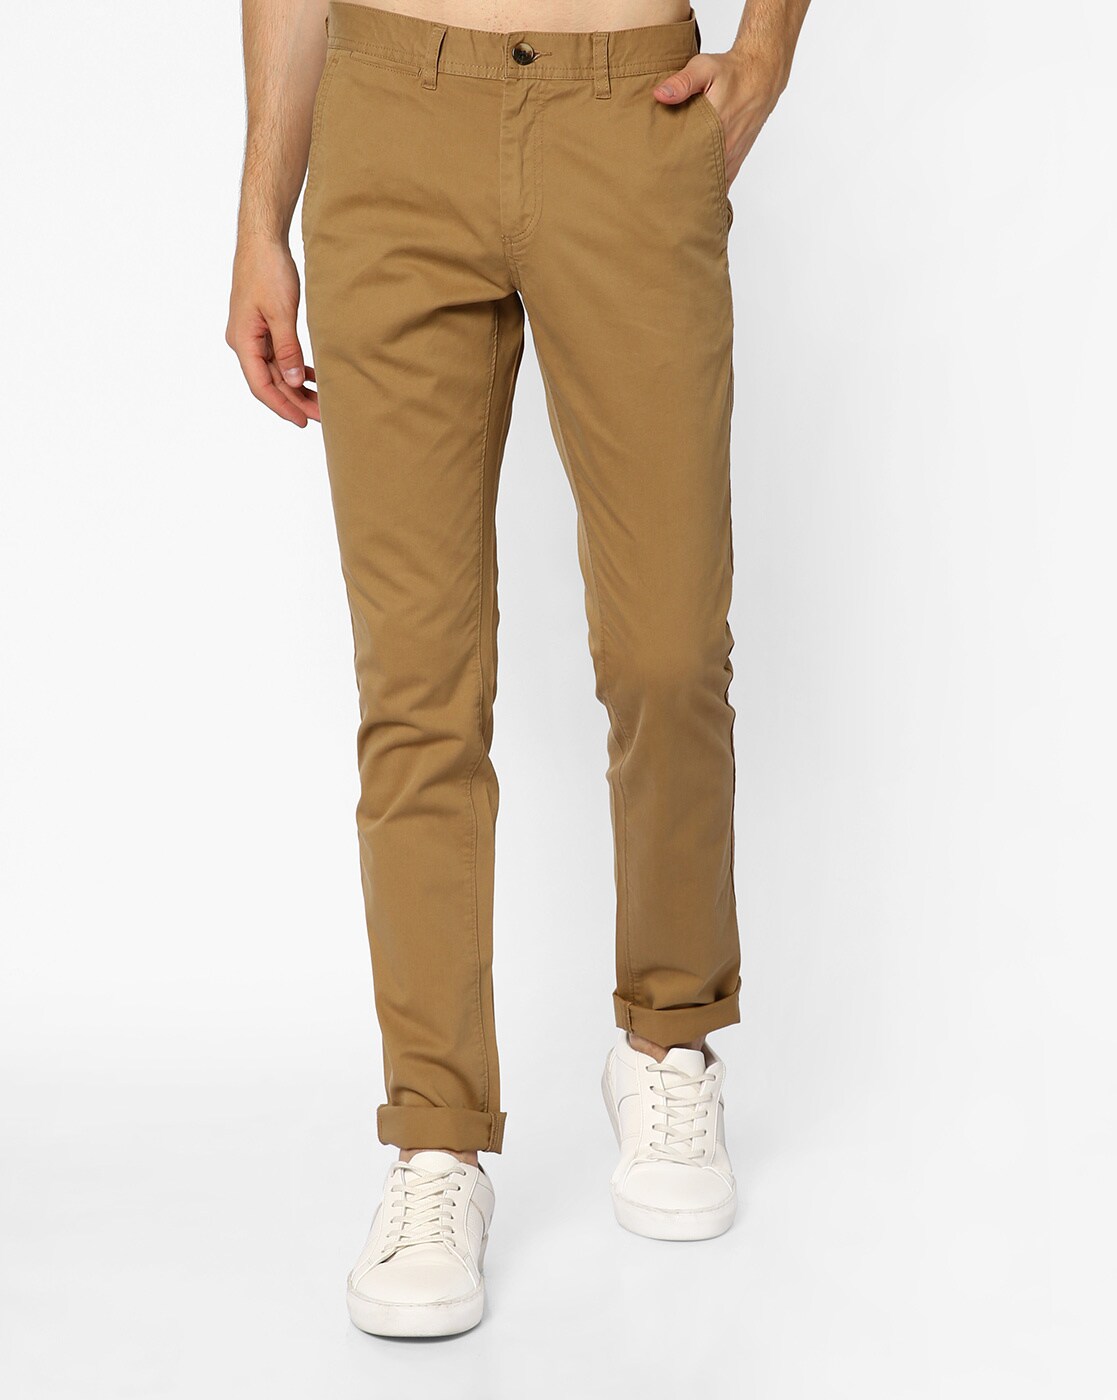 Buy Beige Trousers  Pants for Men by MCHENRY Online  Ajiocom